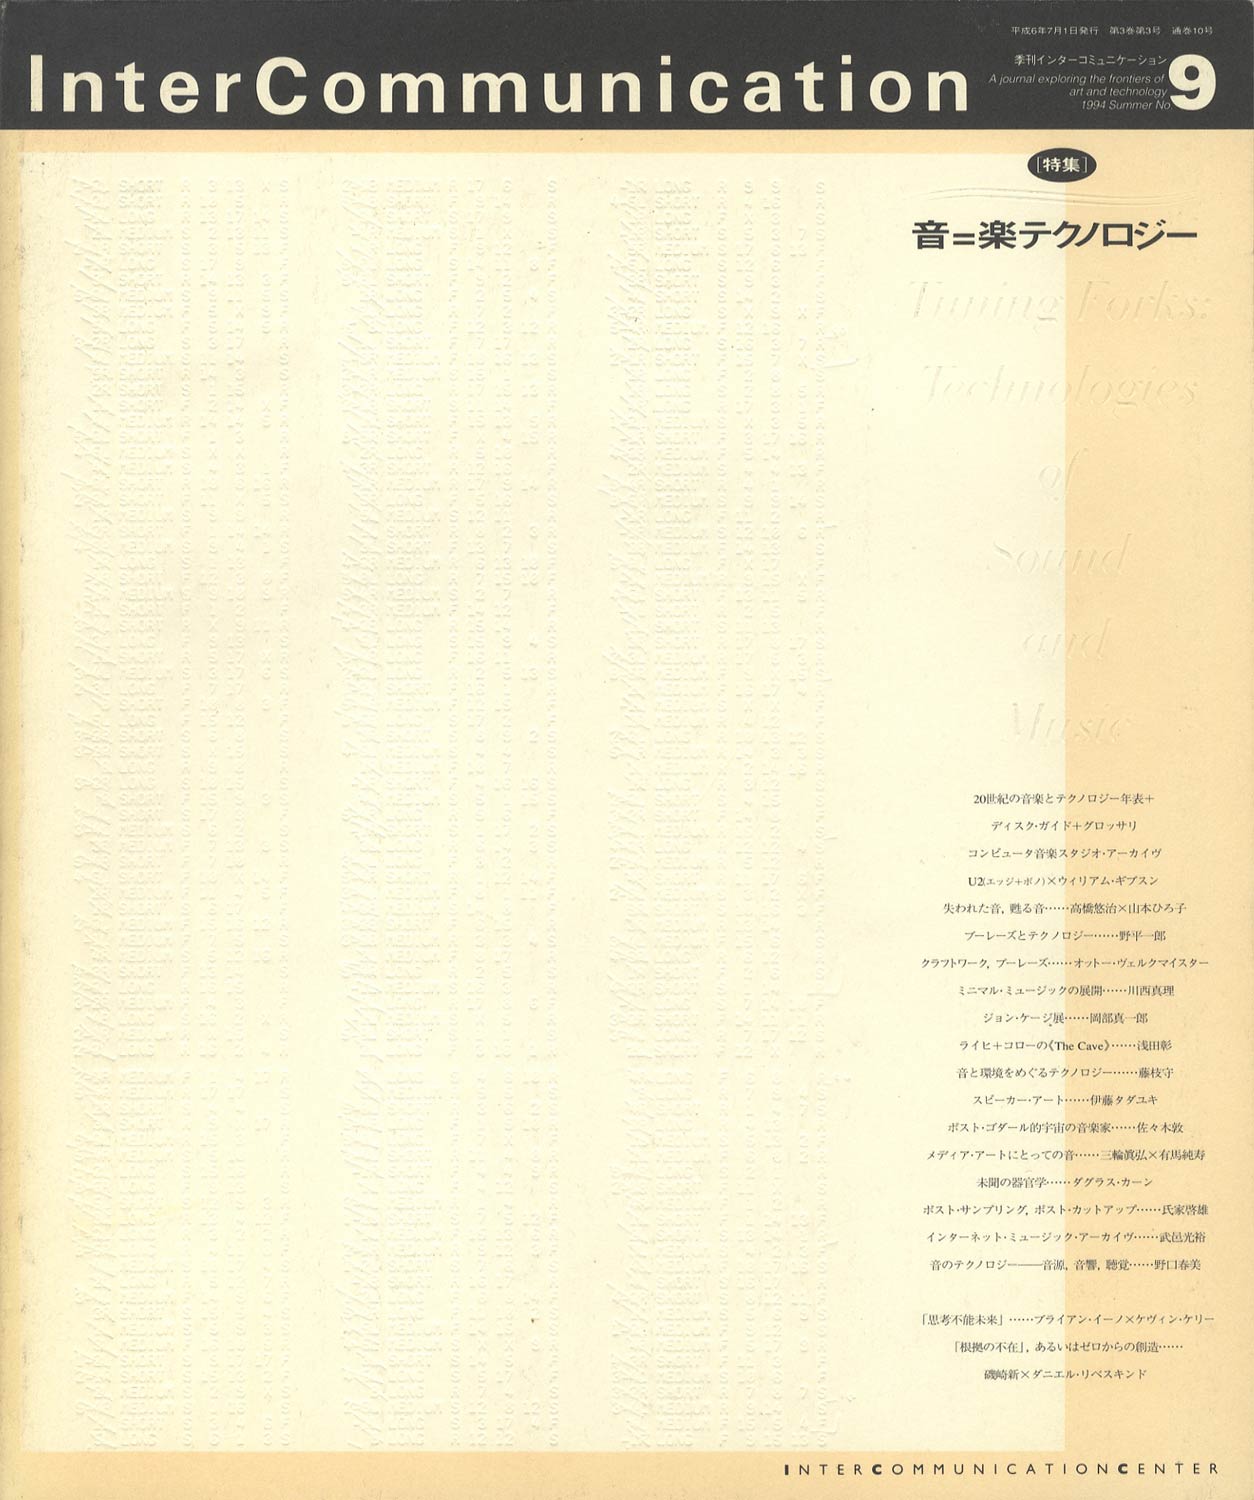 InterCommunication　季刊 インターコミュニケーション No.9 1994 Summer